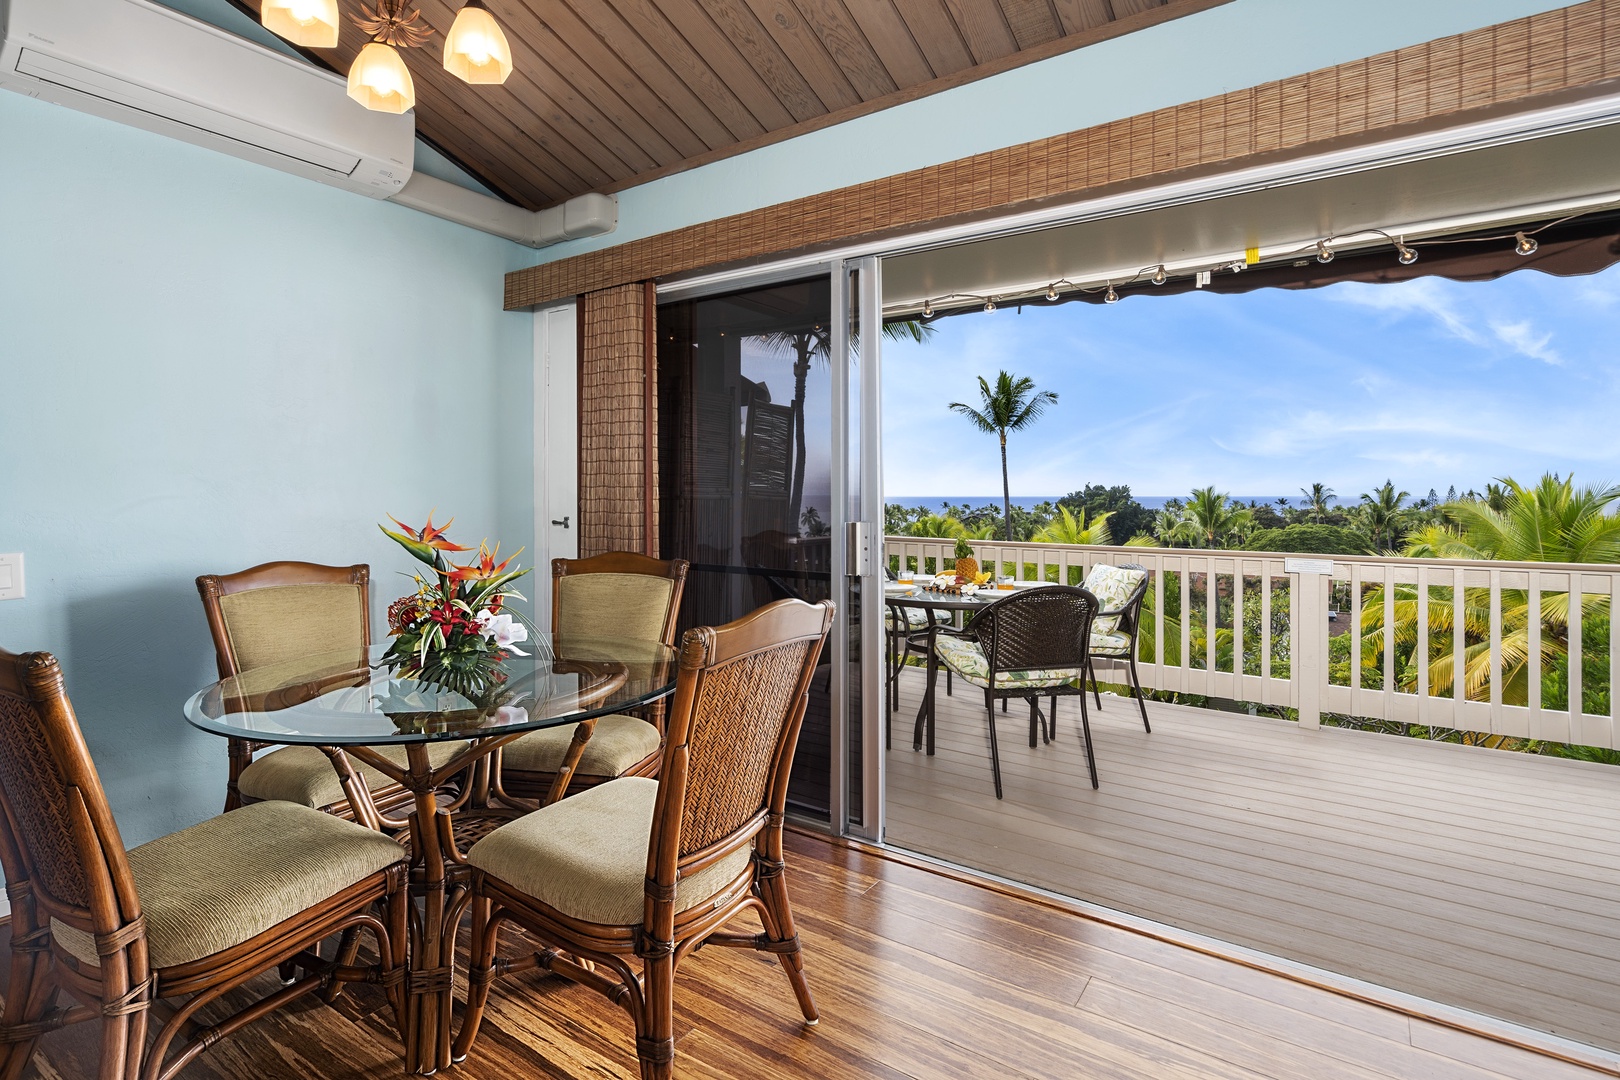 Kailua-Kona Vacation Rentals, Keauhou Resort 116 - Indoor dining for 4